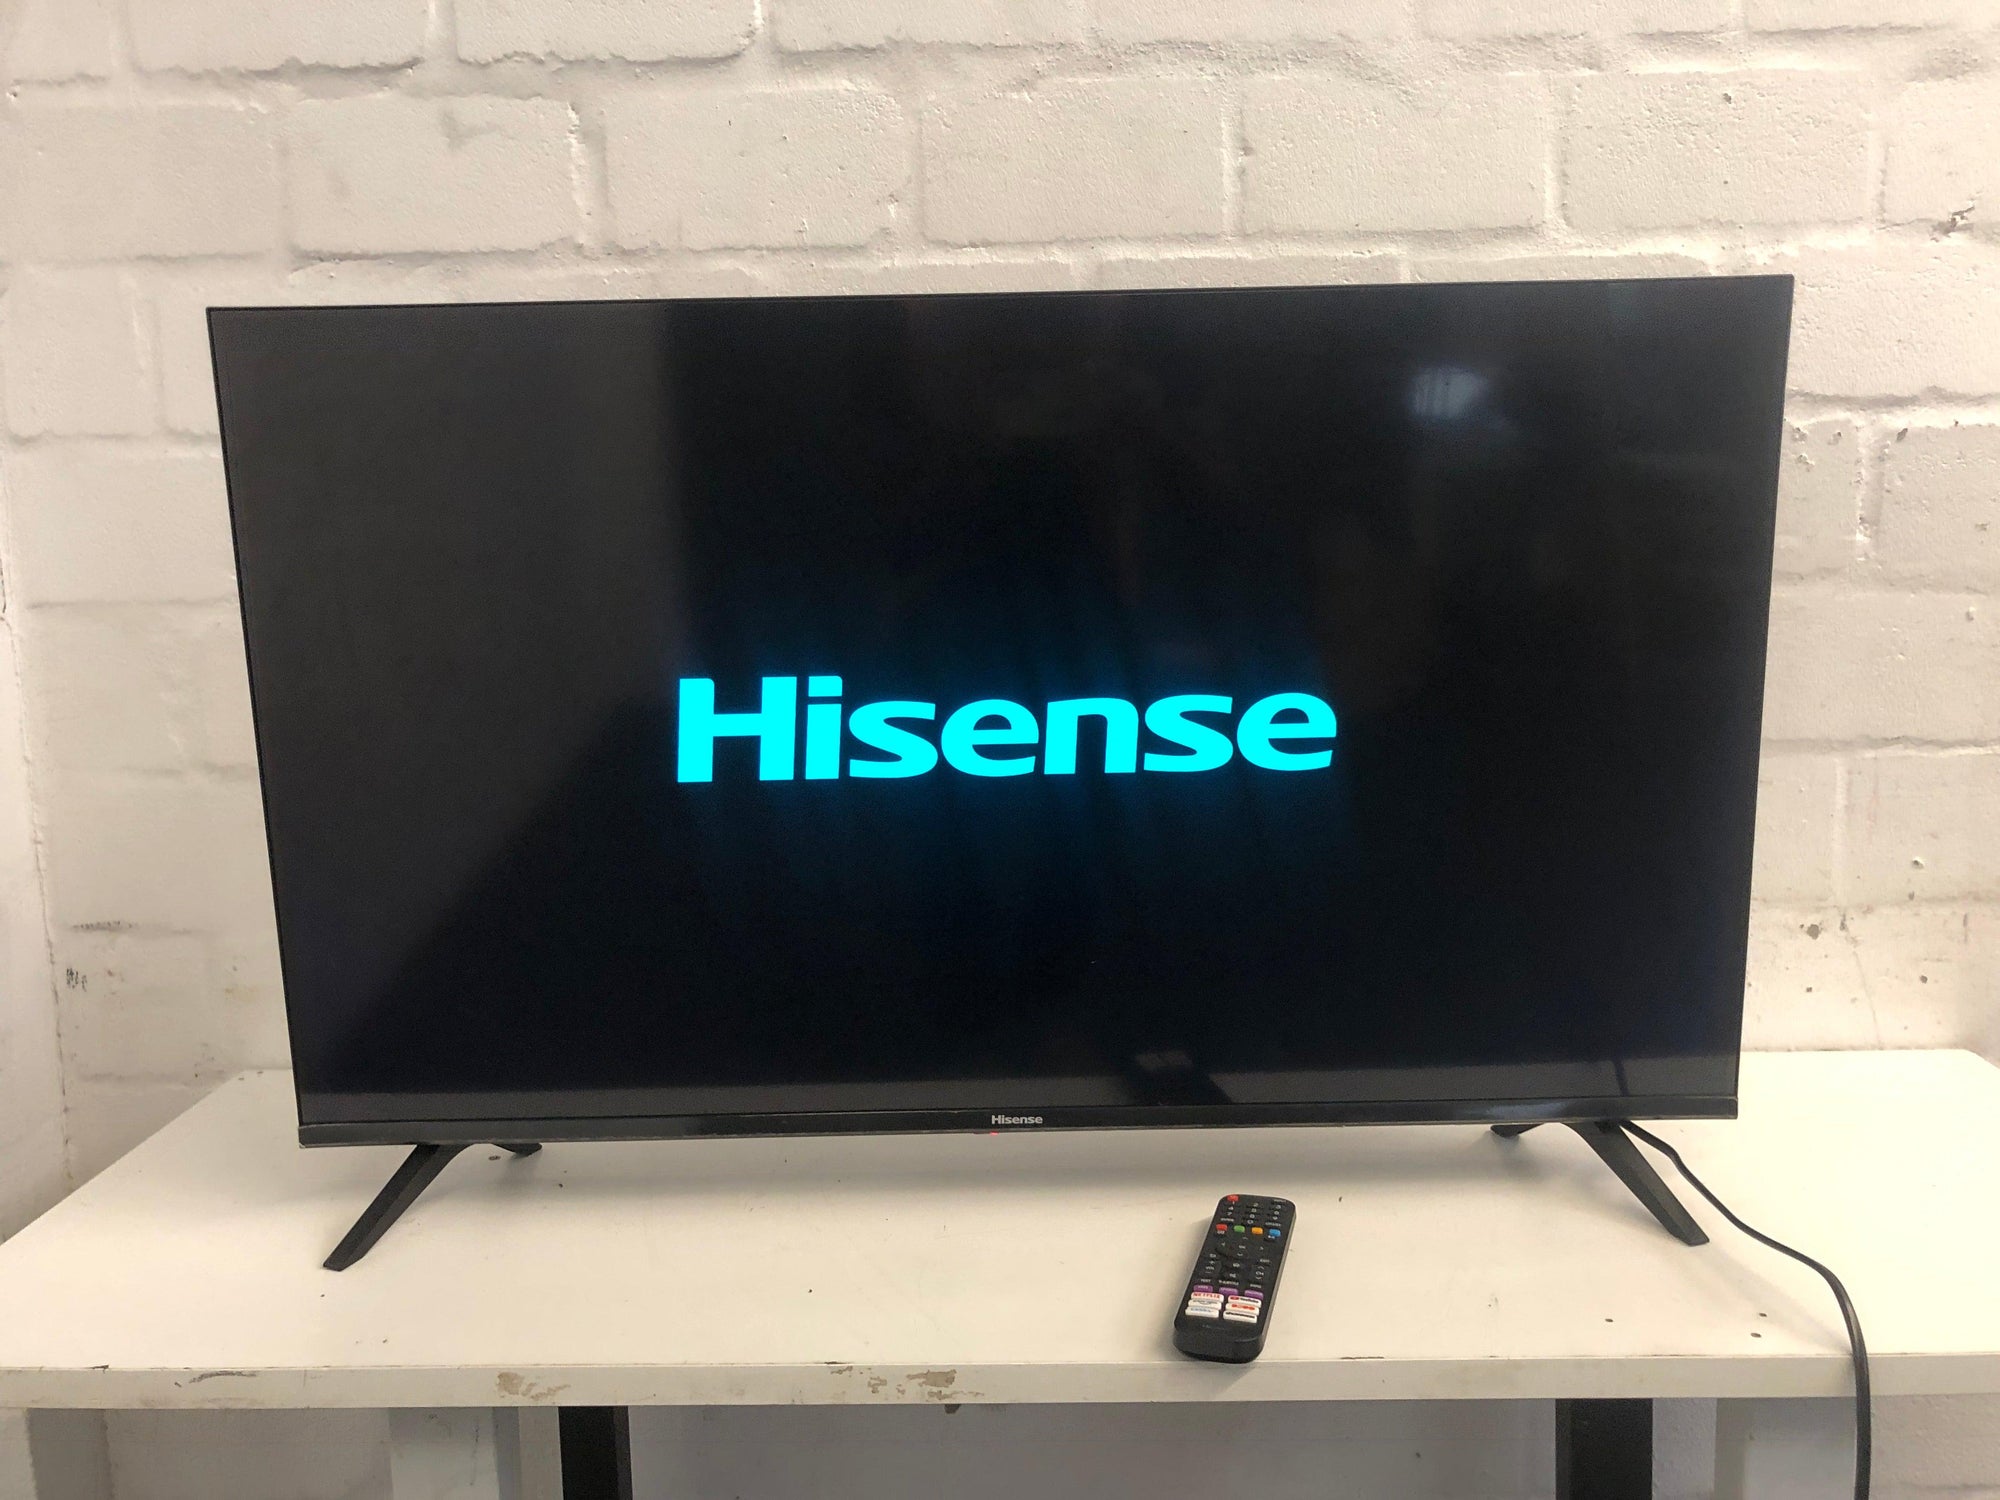 Hisense 40" LCD TV